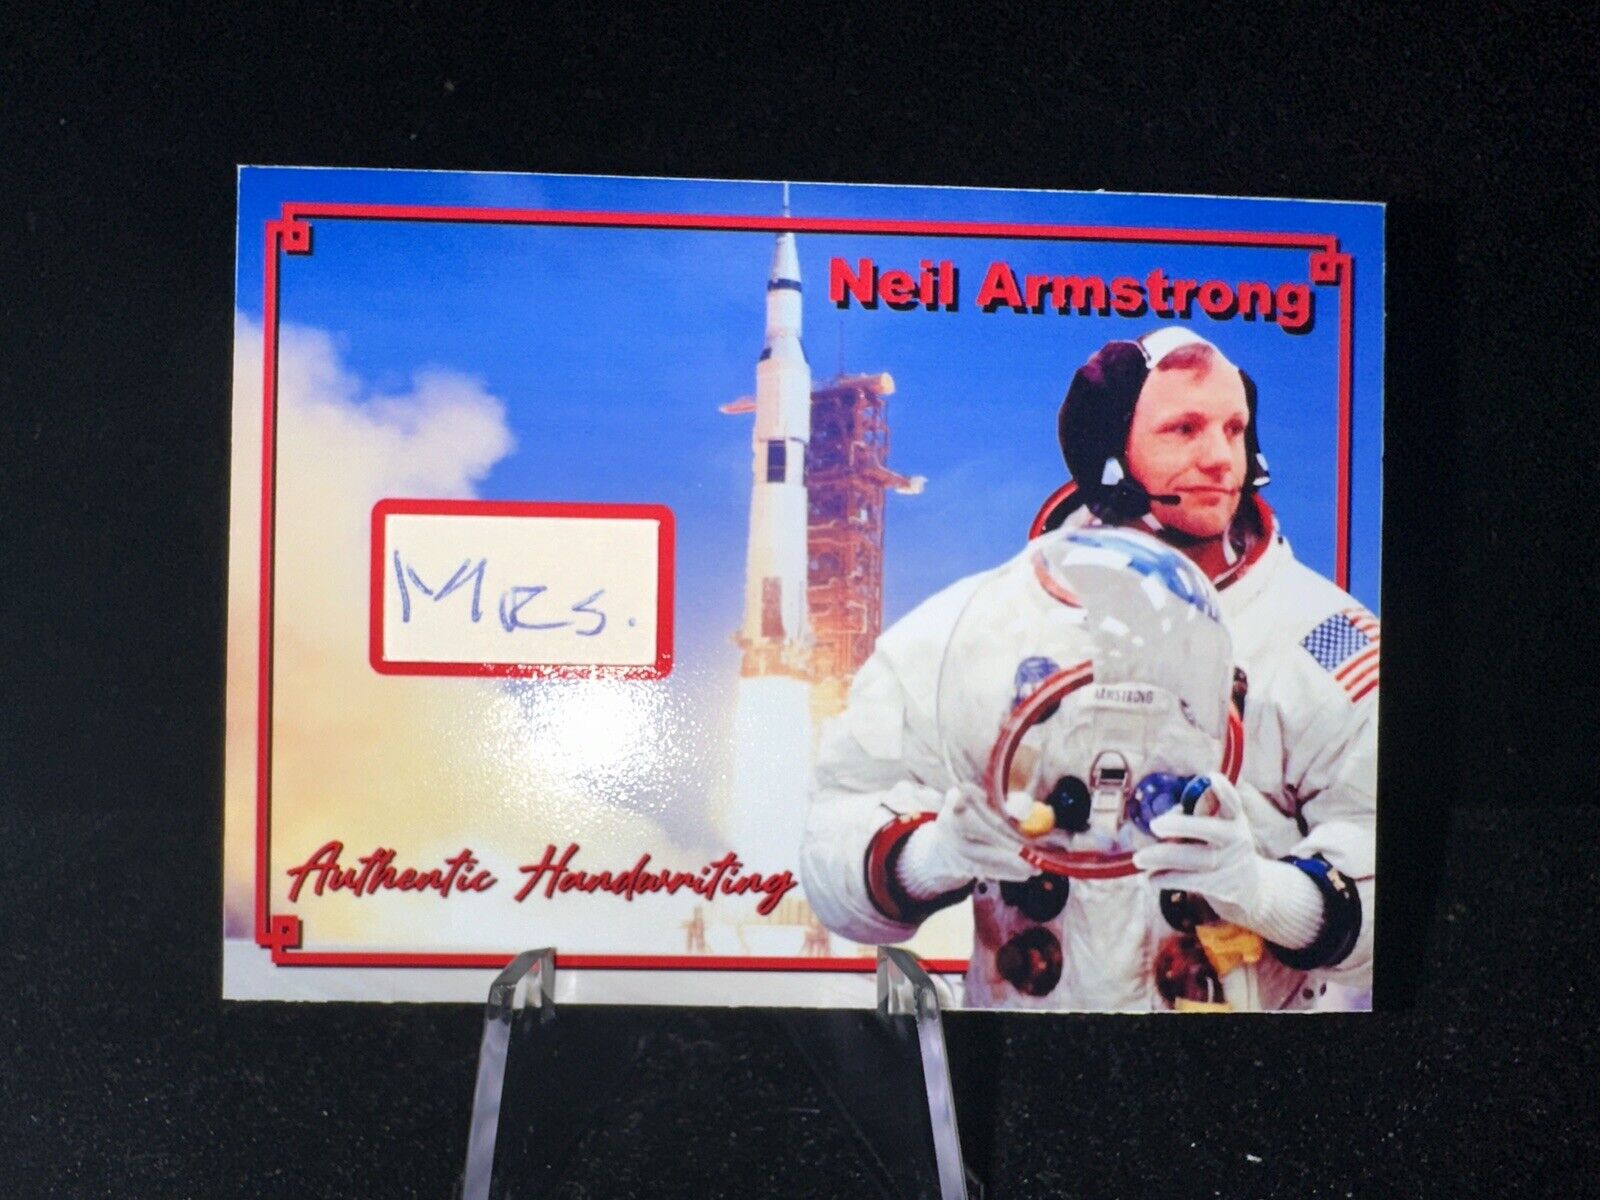 Neil Armstrong Handwritten Word MRS. Custom Trading Card - Apollo 11 - JSA